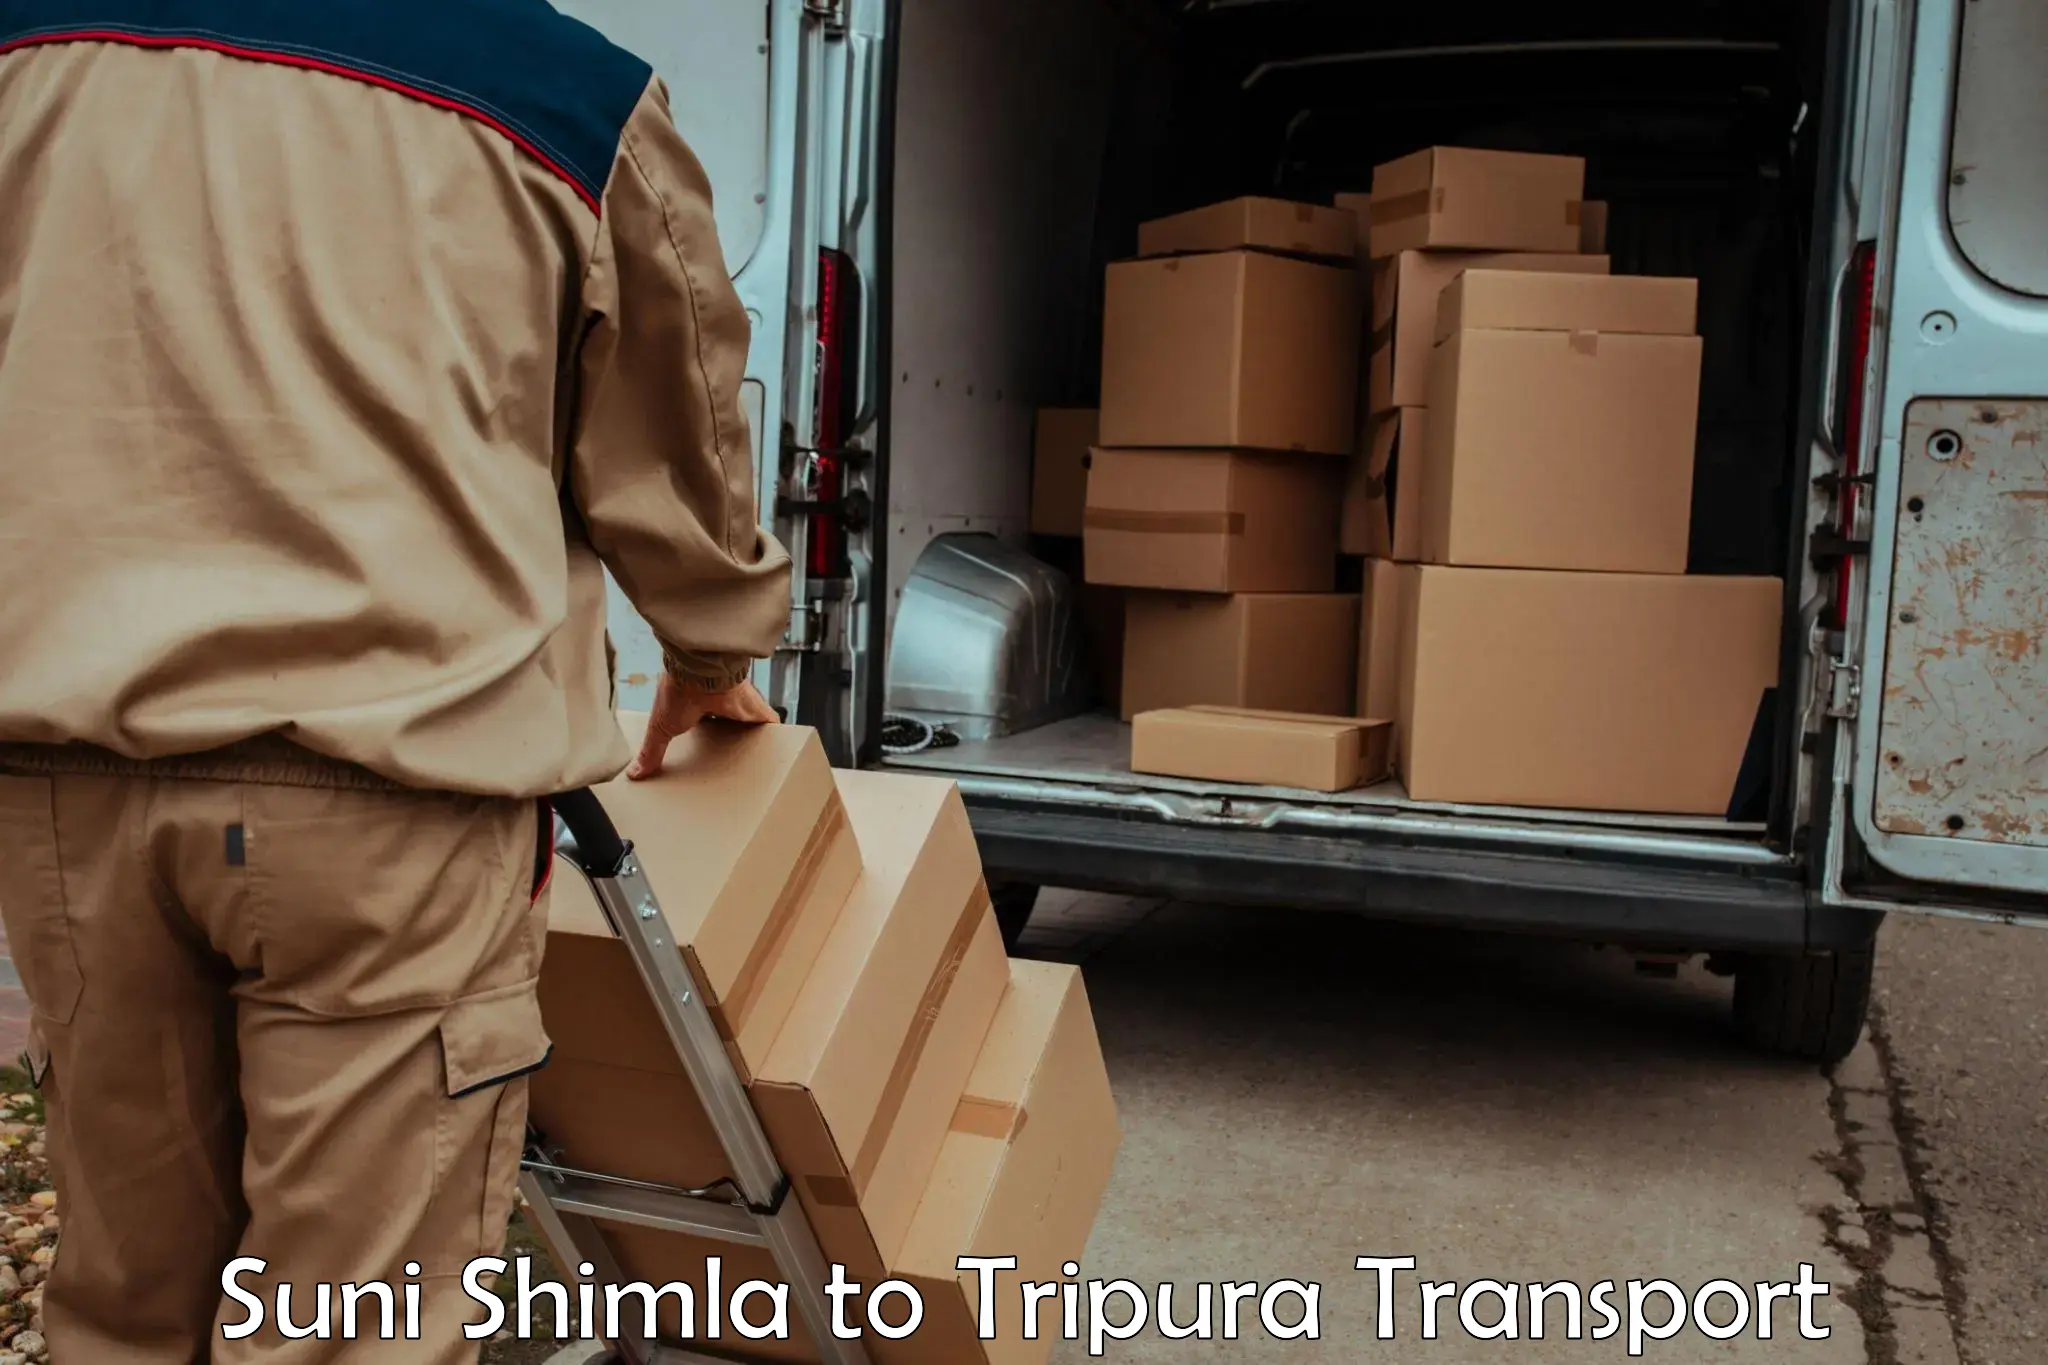 Transport shared services Suni Shimla to Udaipur Tripura